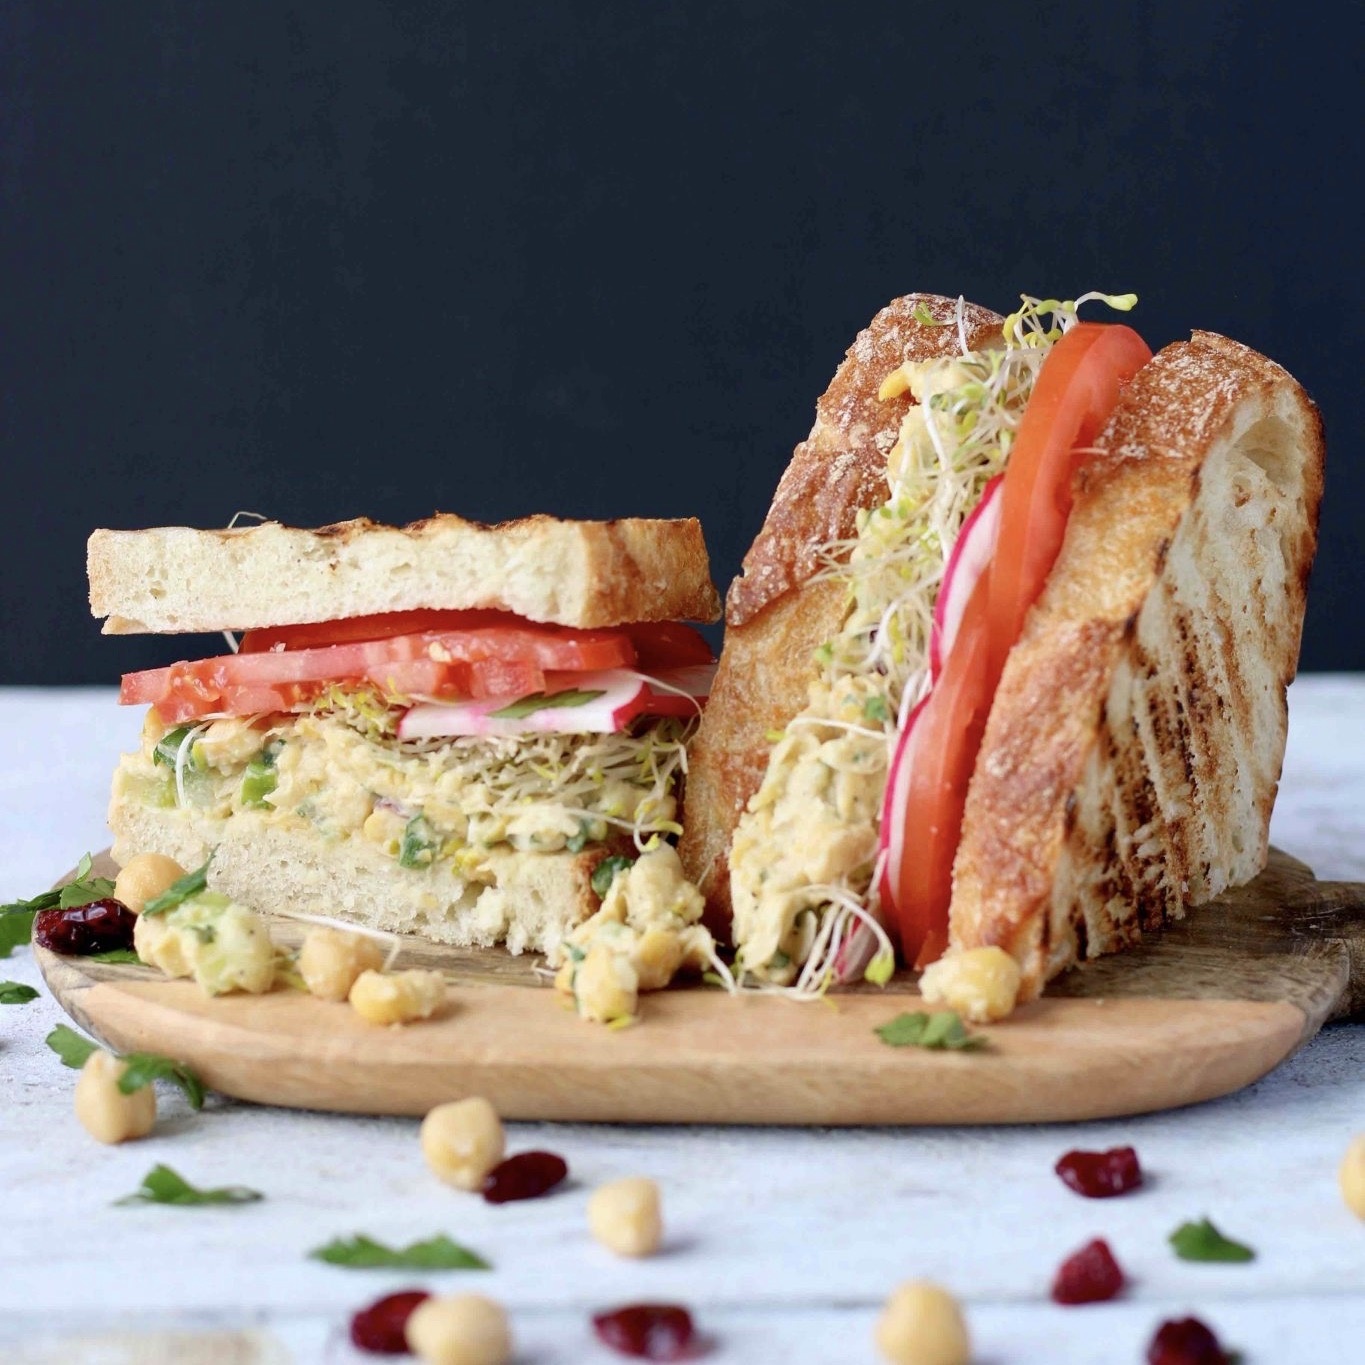 Recipe of the week: Chickpea Salad Sandwich